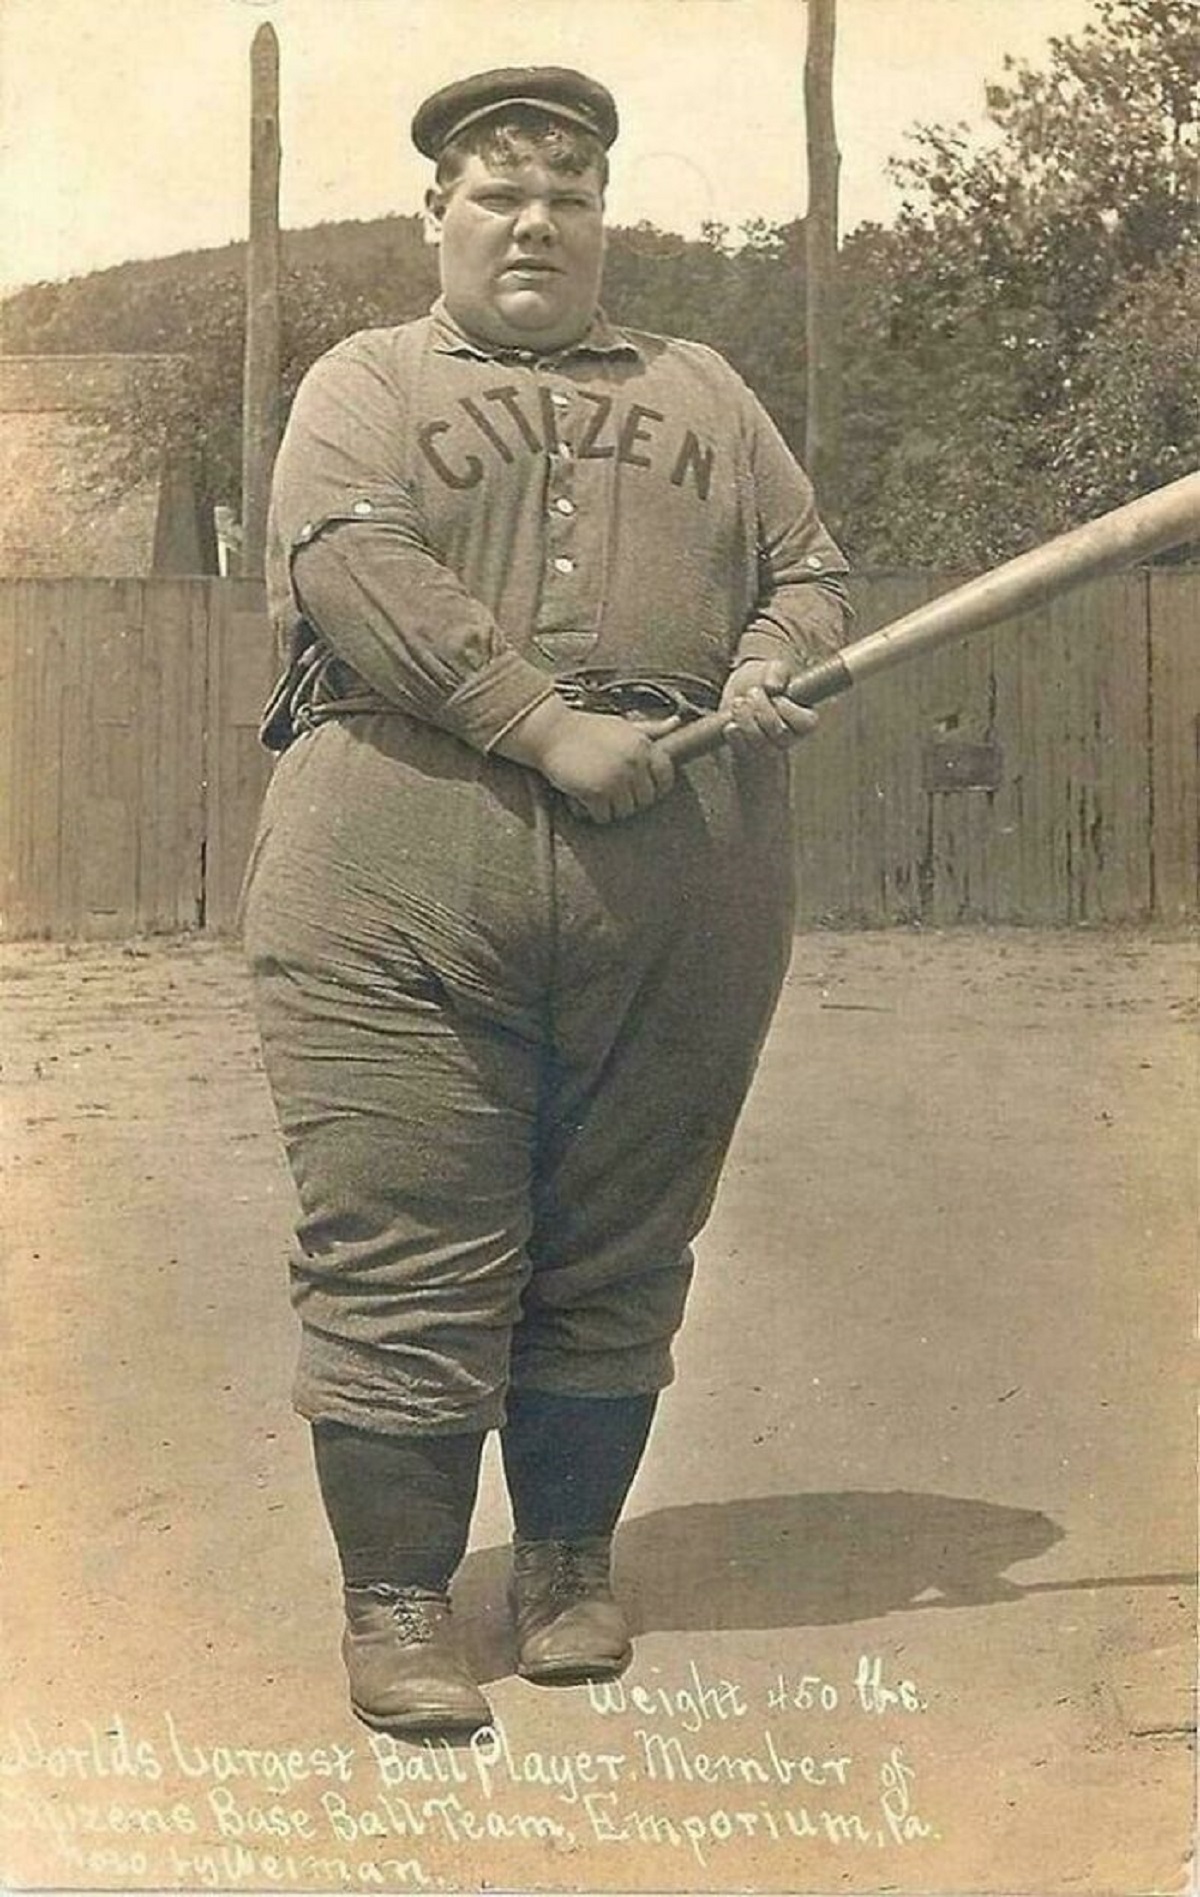 world's heaviest baseball player - Citizen weight 450 the Worlds Largest Bat Player. Member Szene Base Ball Team Emporium, la se kytkerman